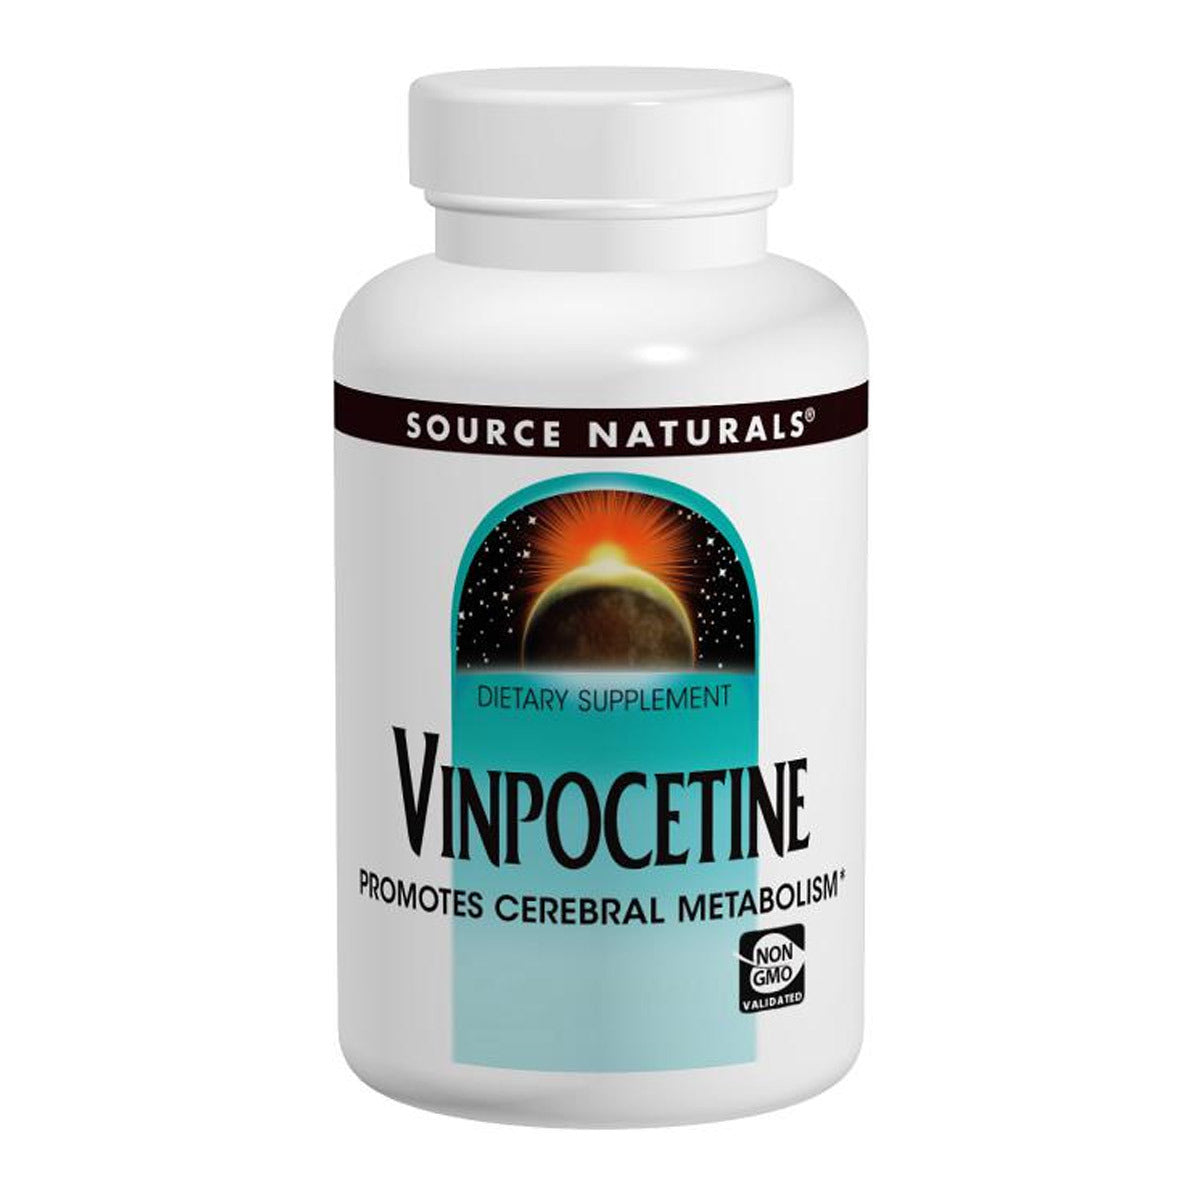 Primary image of Vinpocetine